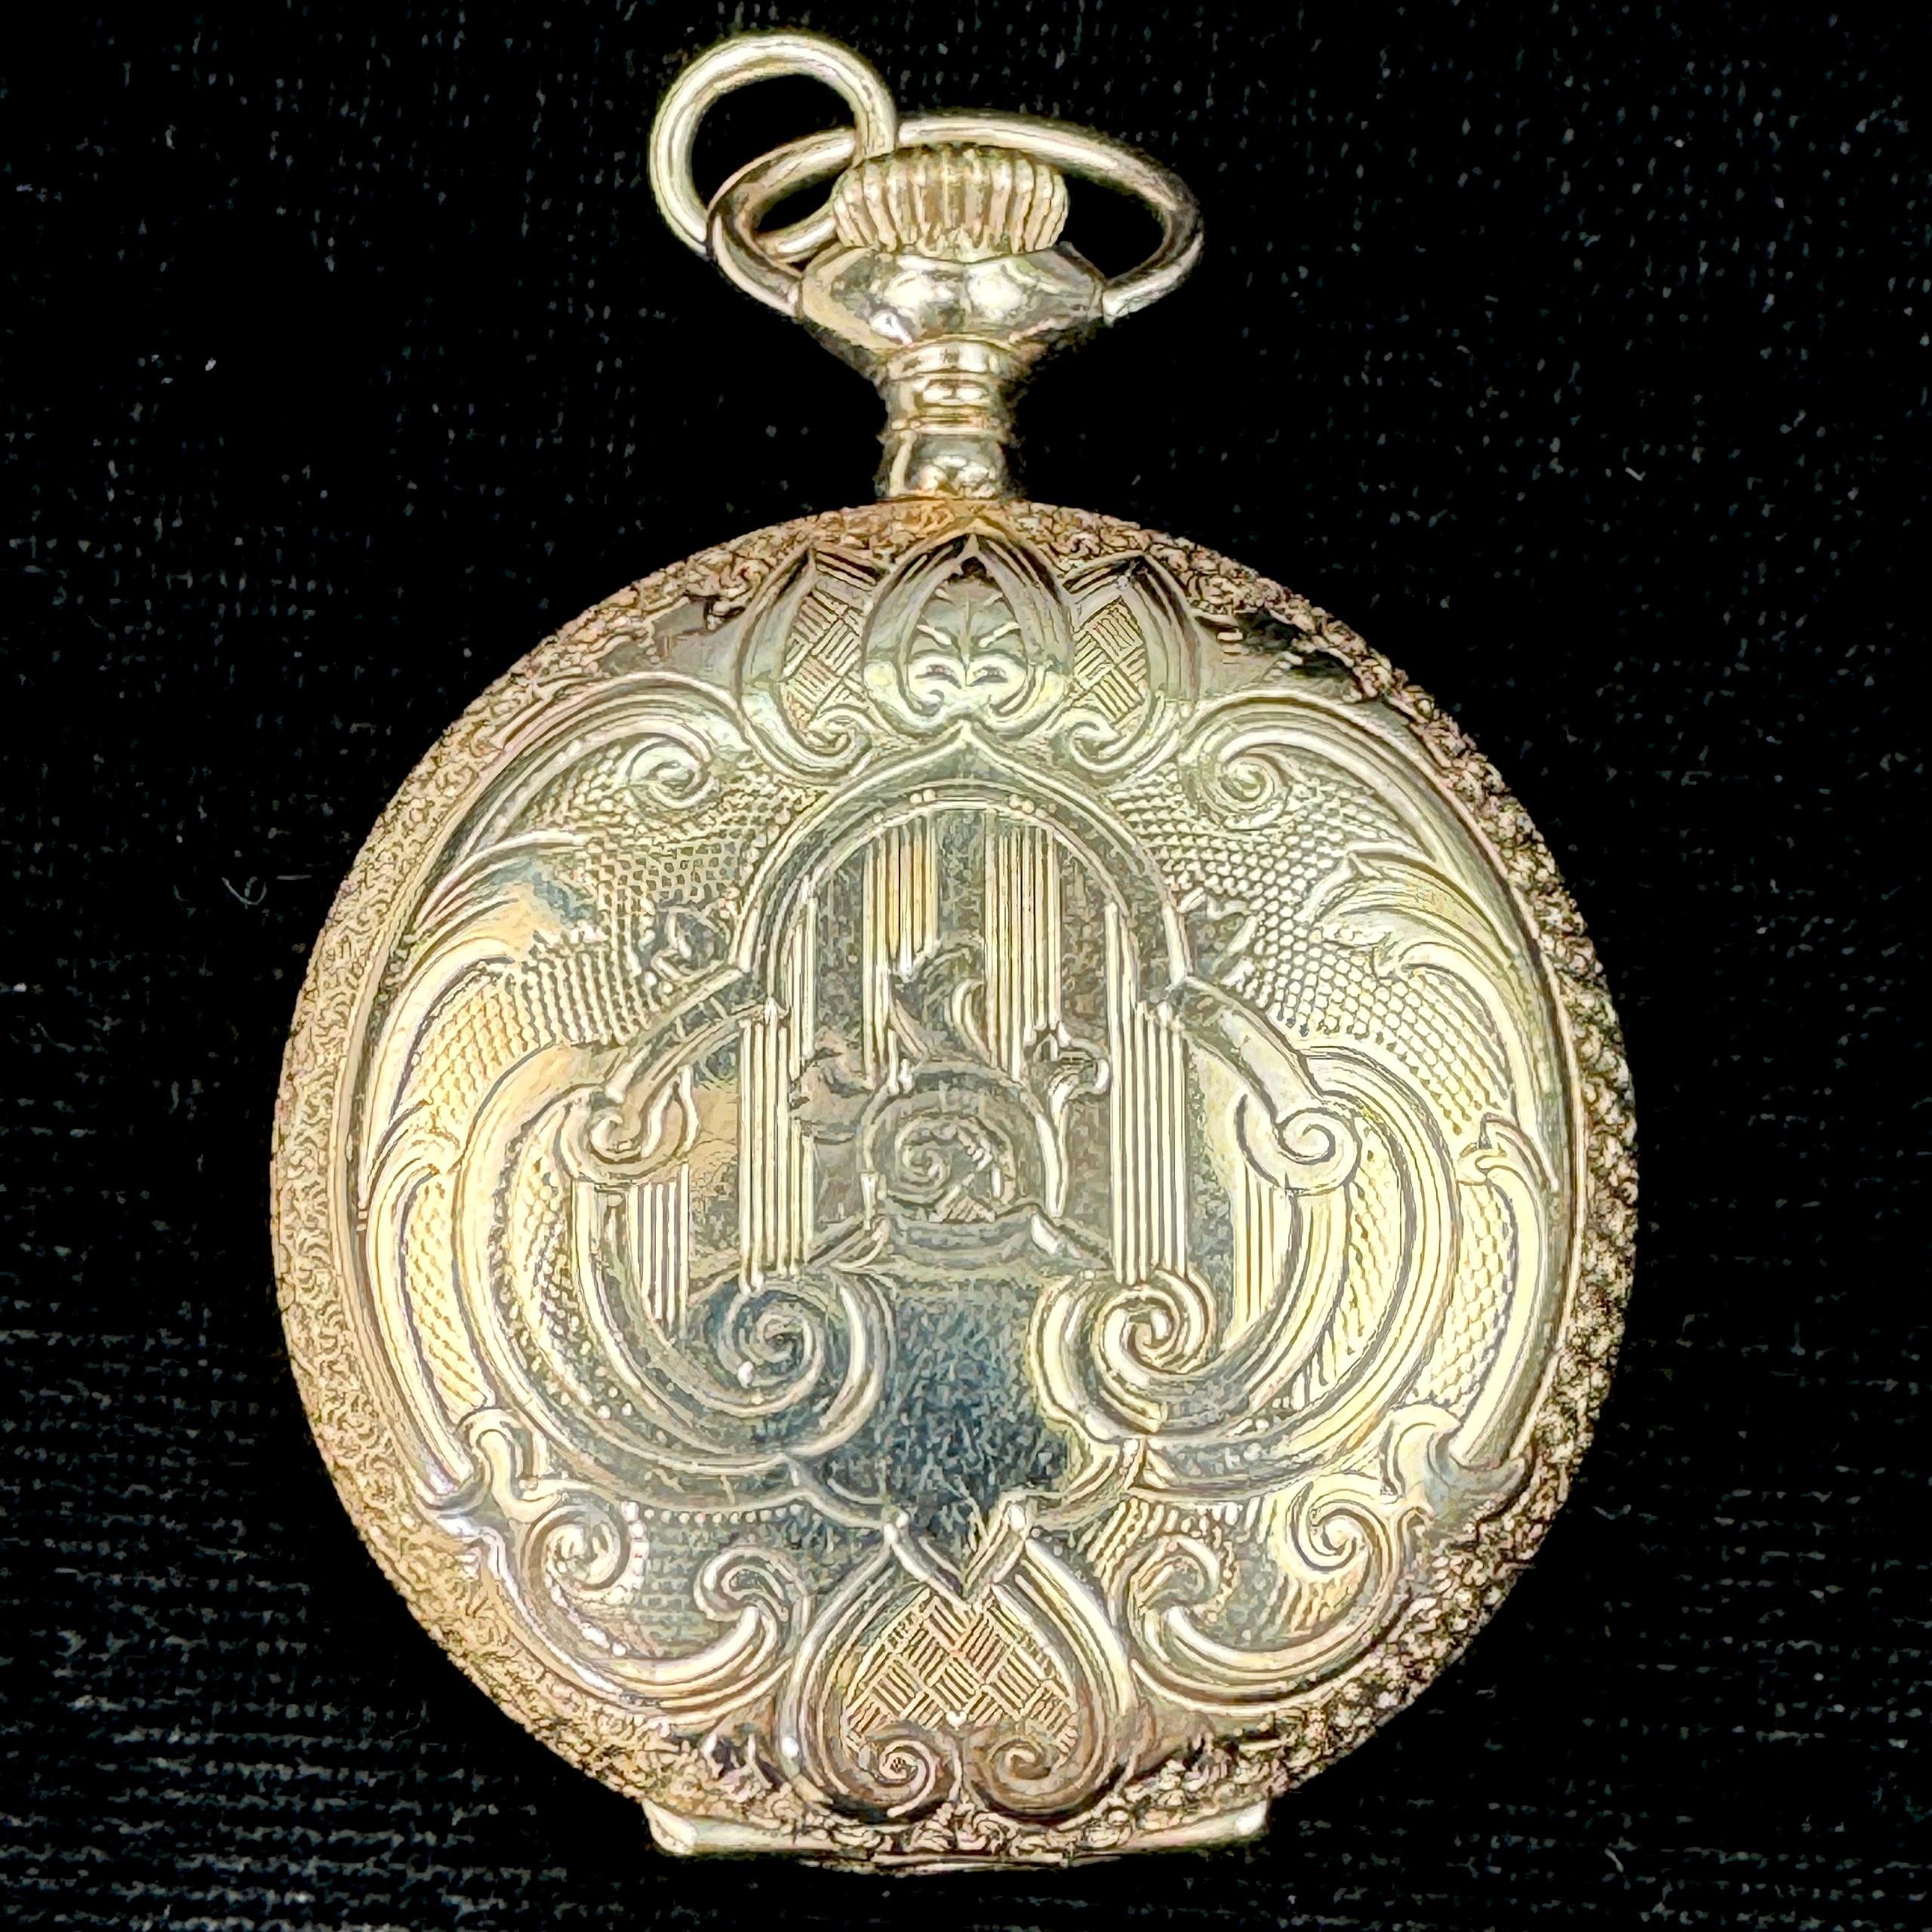 Circa 1940 17-jewel Swiss covered pocket watch